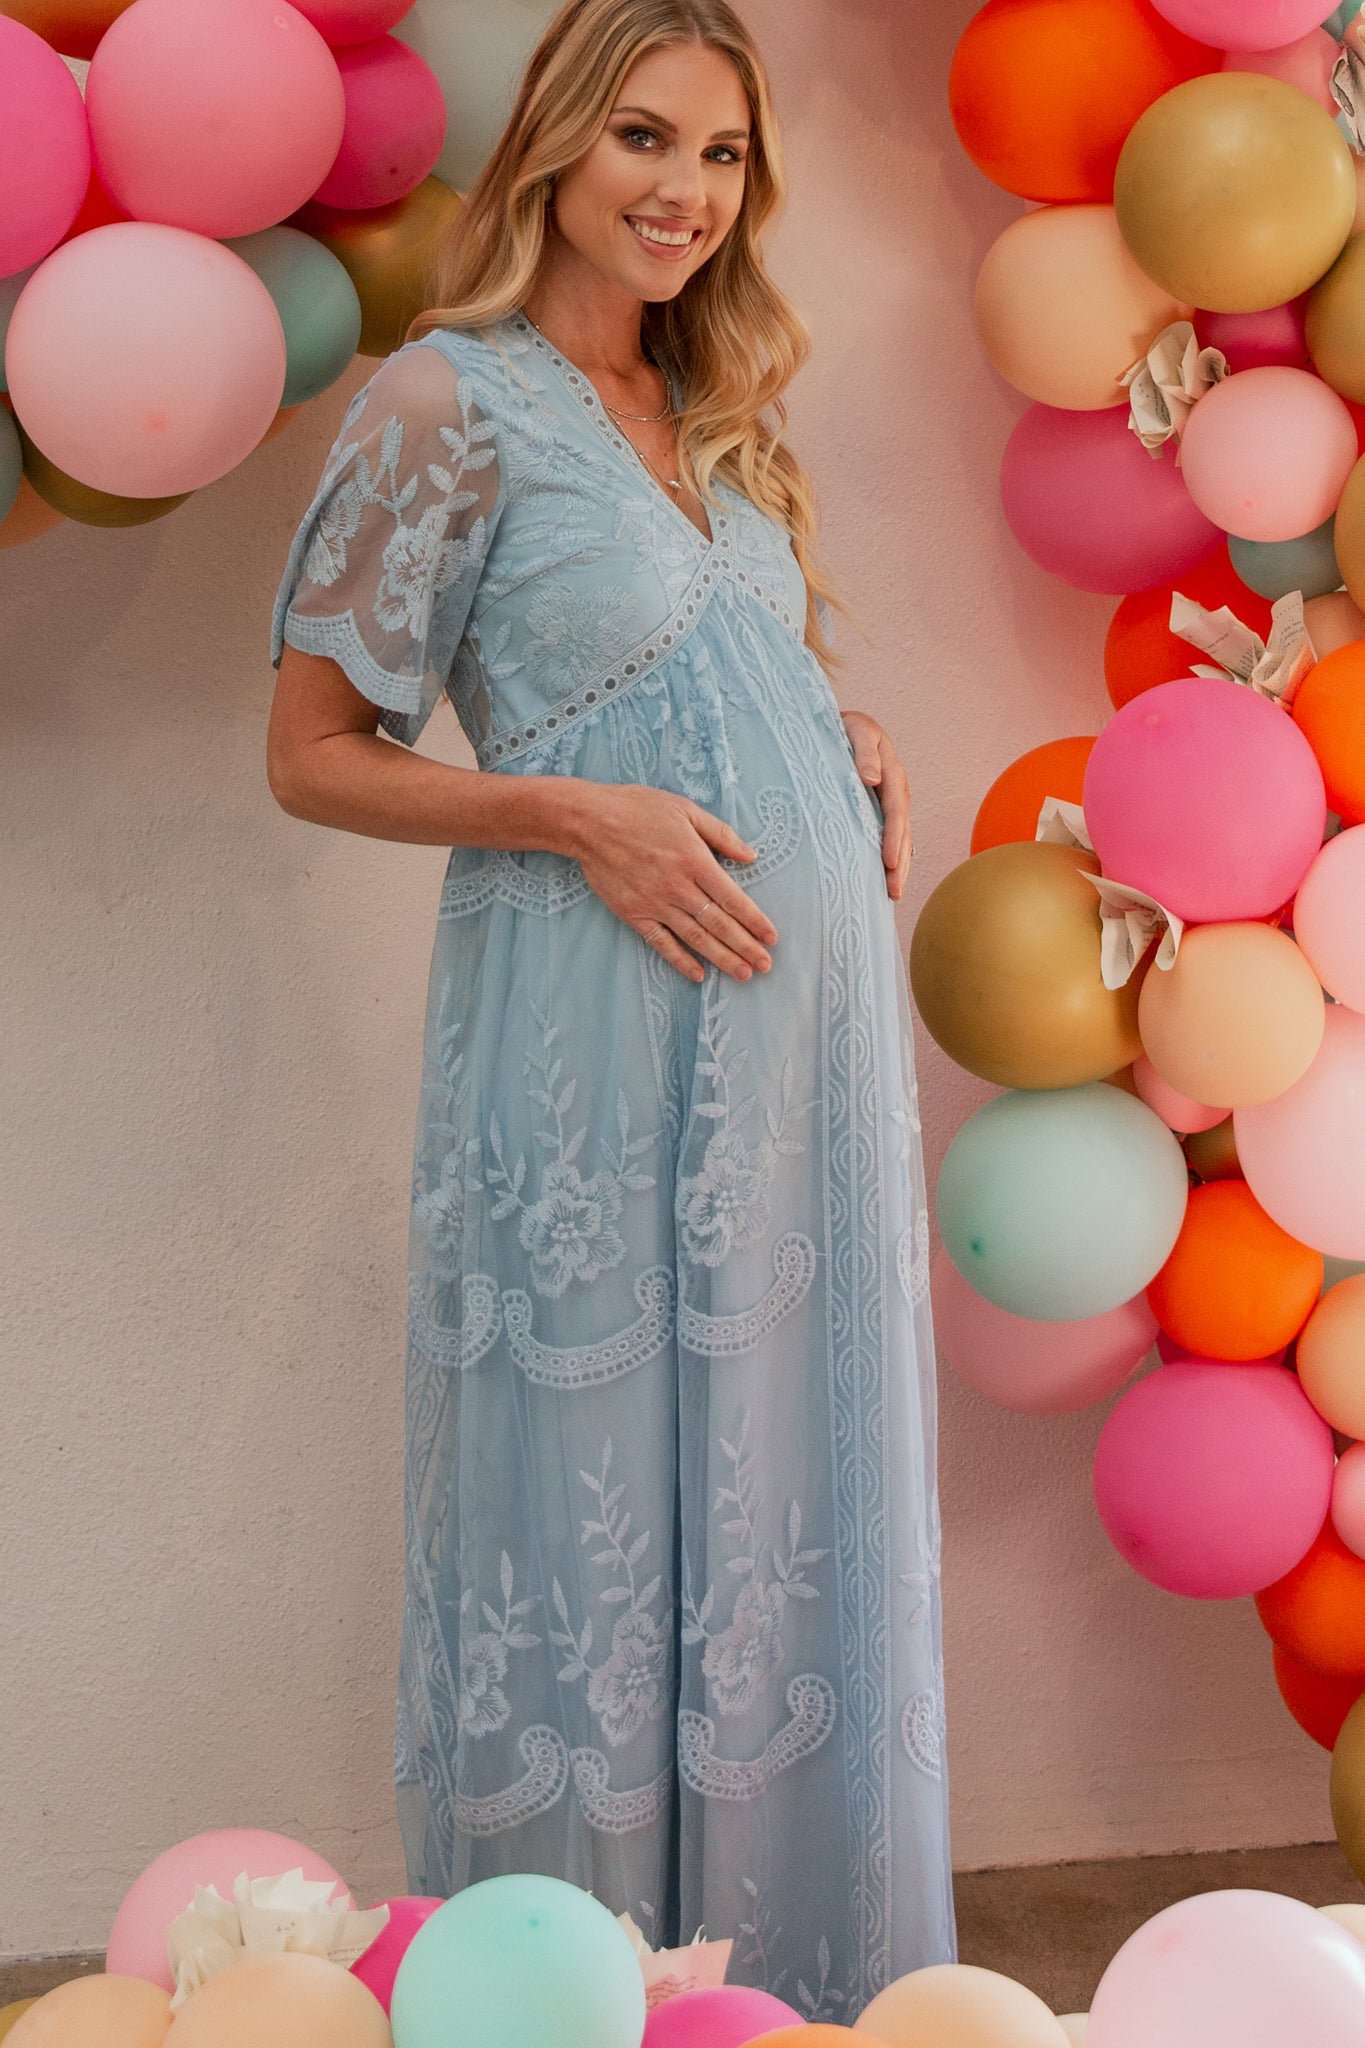 PinkBlush Navy Lace Mesh Overlay Plus Maternity Maxi Dress